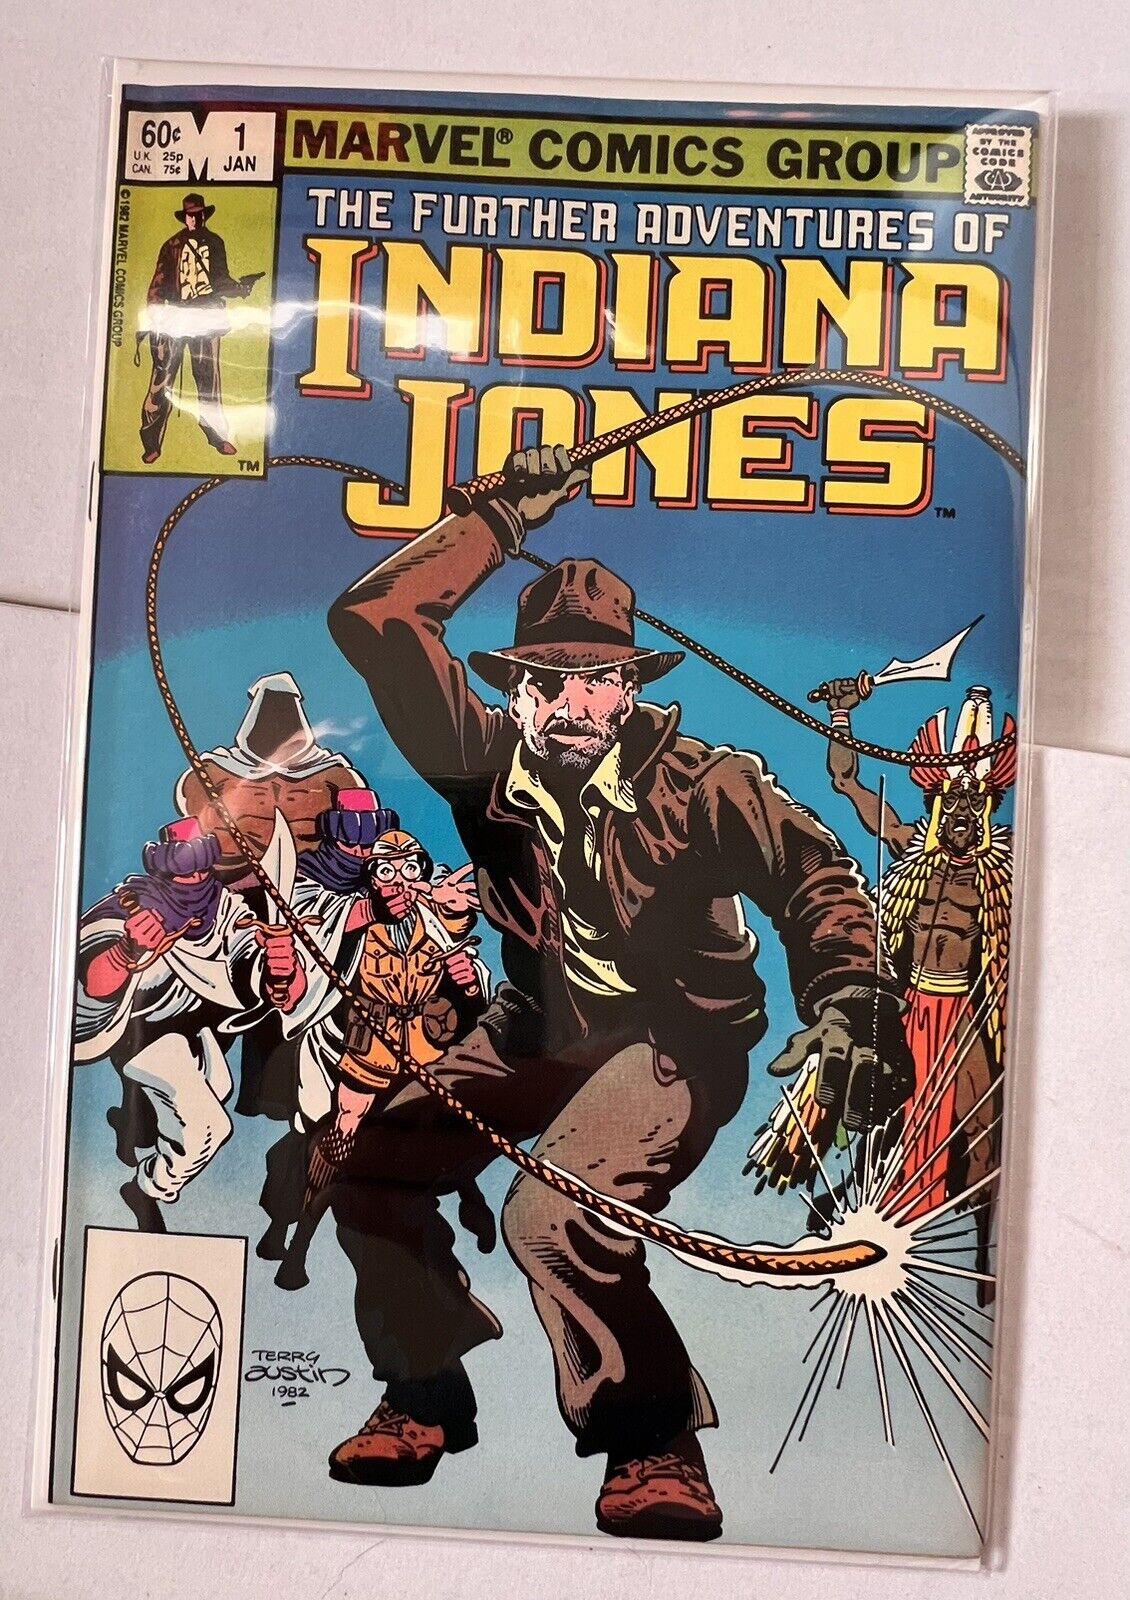 The Further Adventures of Indiana Jones #1 (Marvel Comics January 1983) VF+